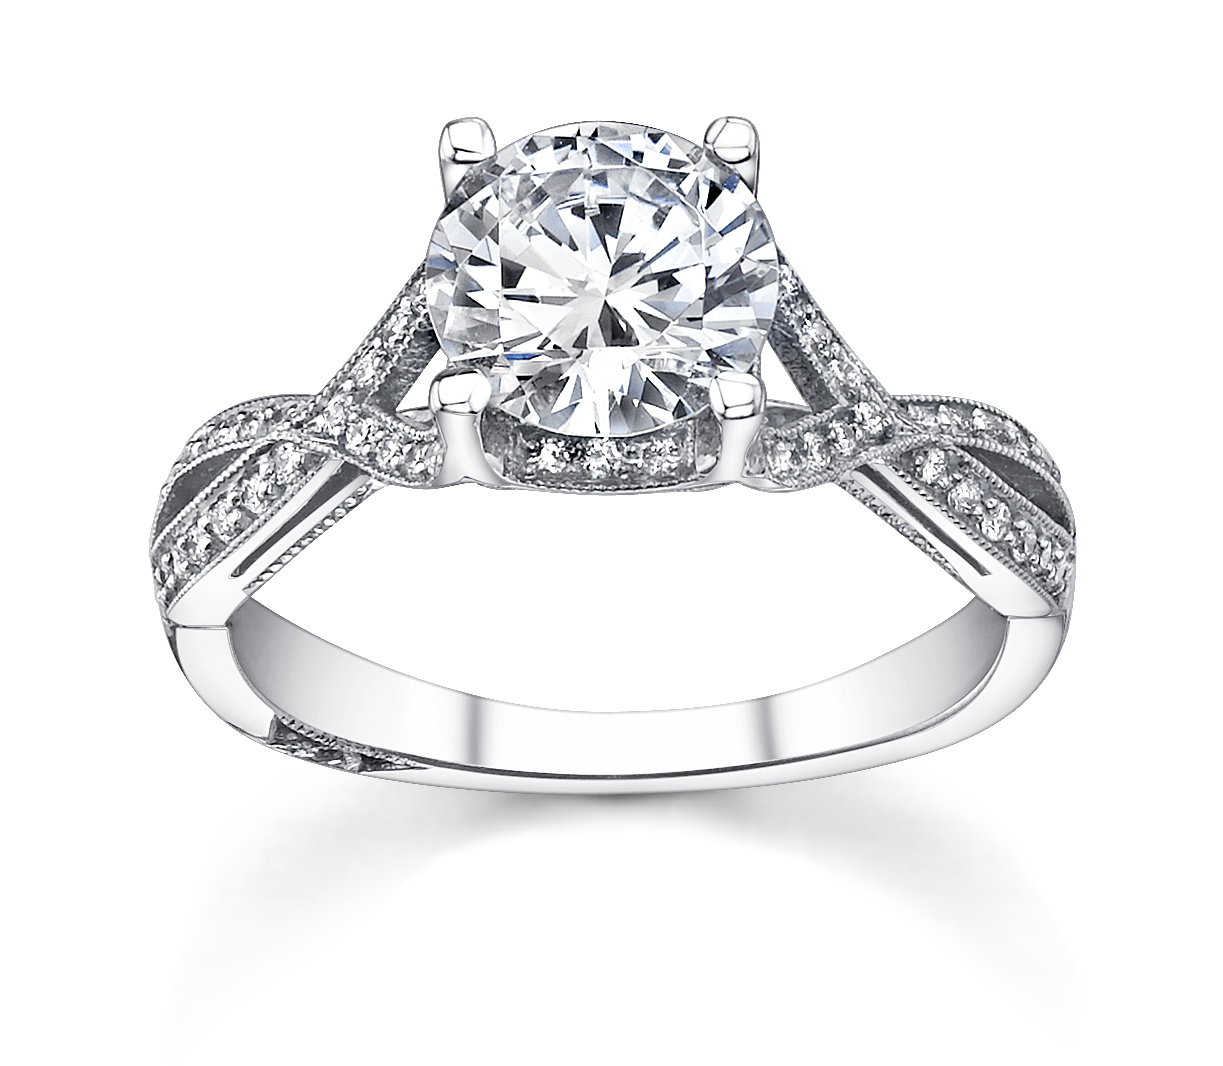 Cheap Wedding Gowns Online Blog: Tacori Engagement Wedding Rings